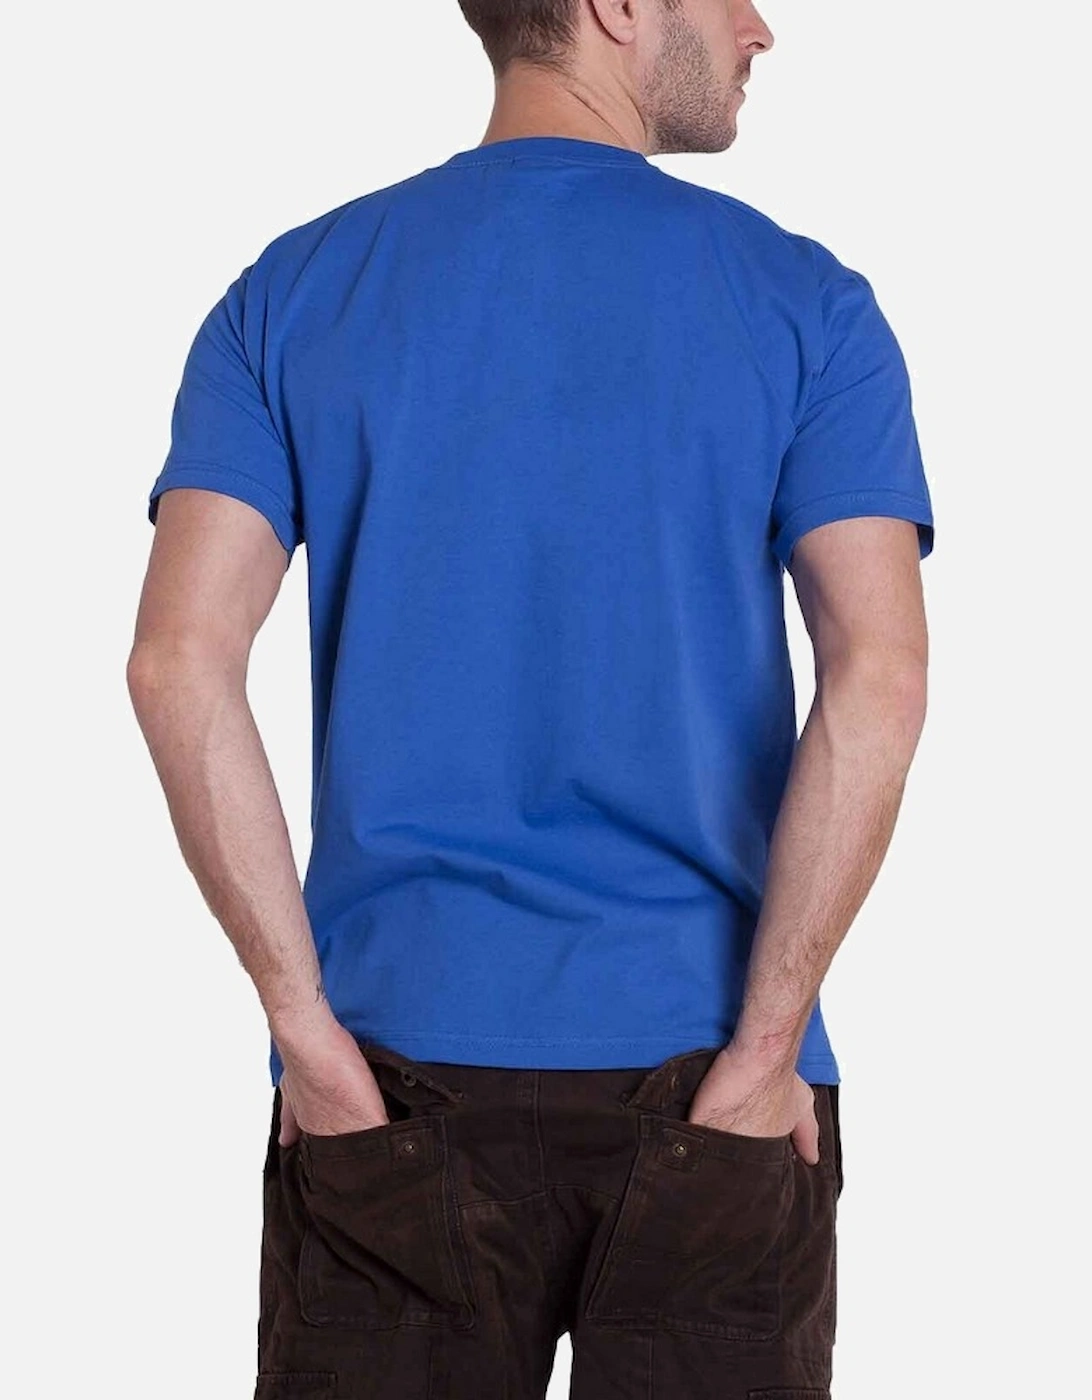 Unisex Adult Copacabana Cotton T-Shirt